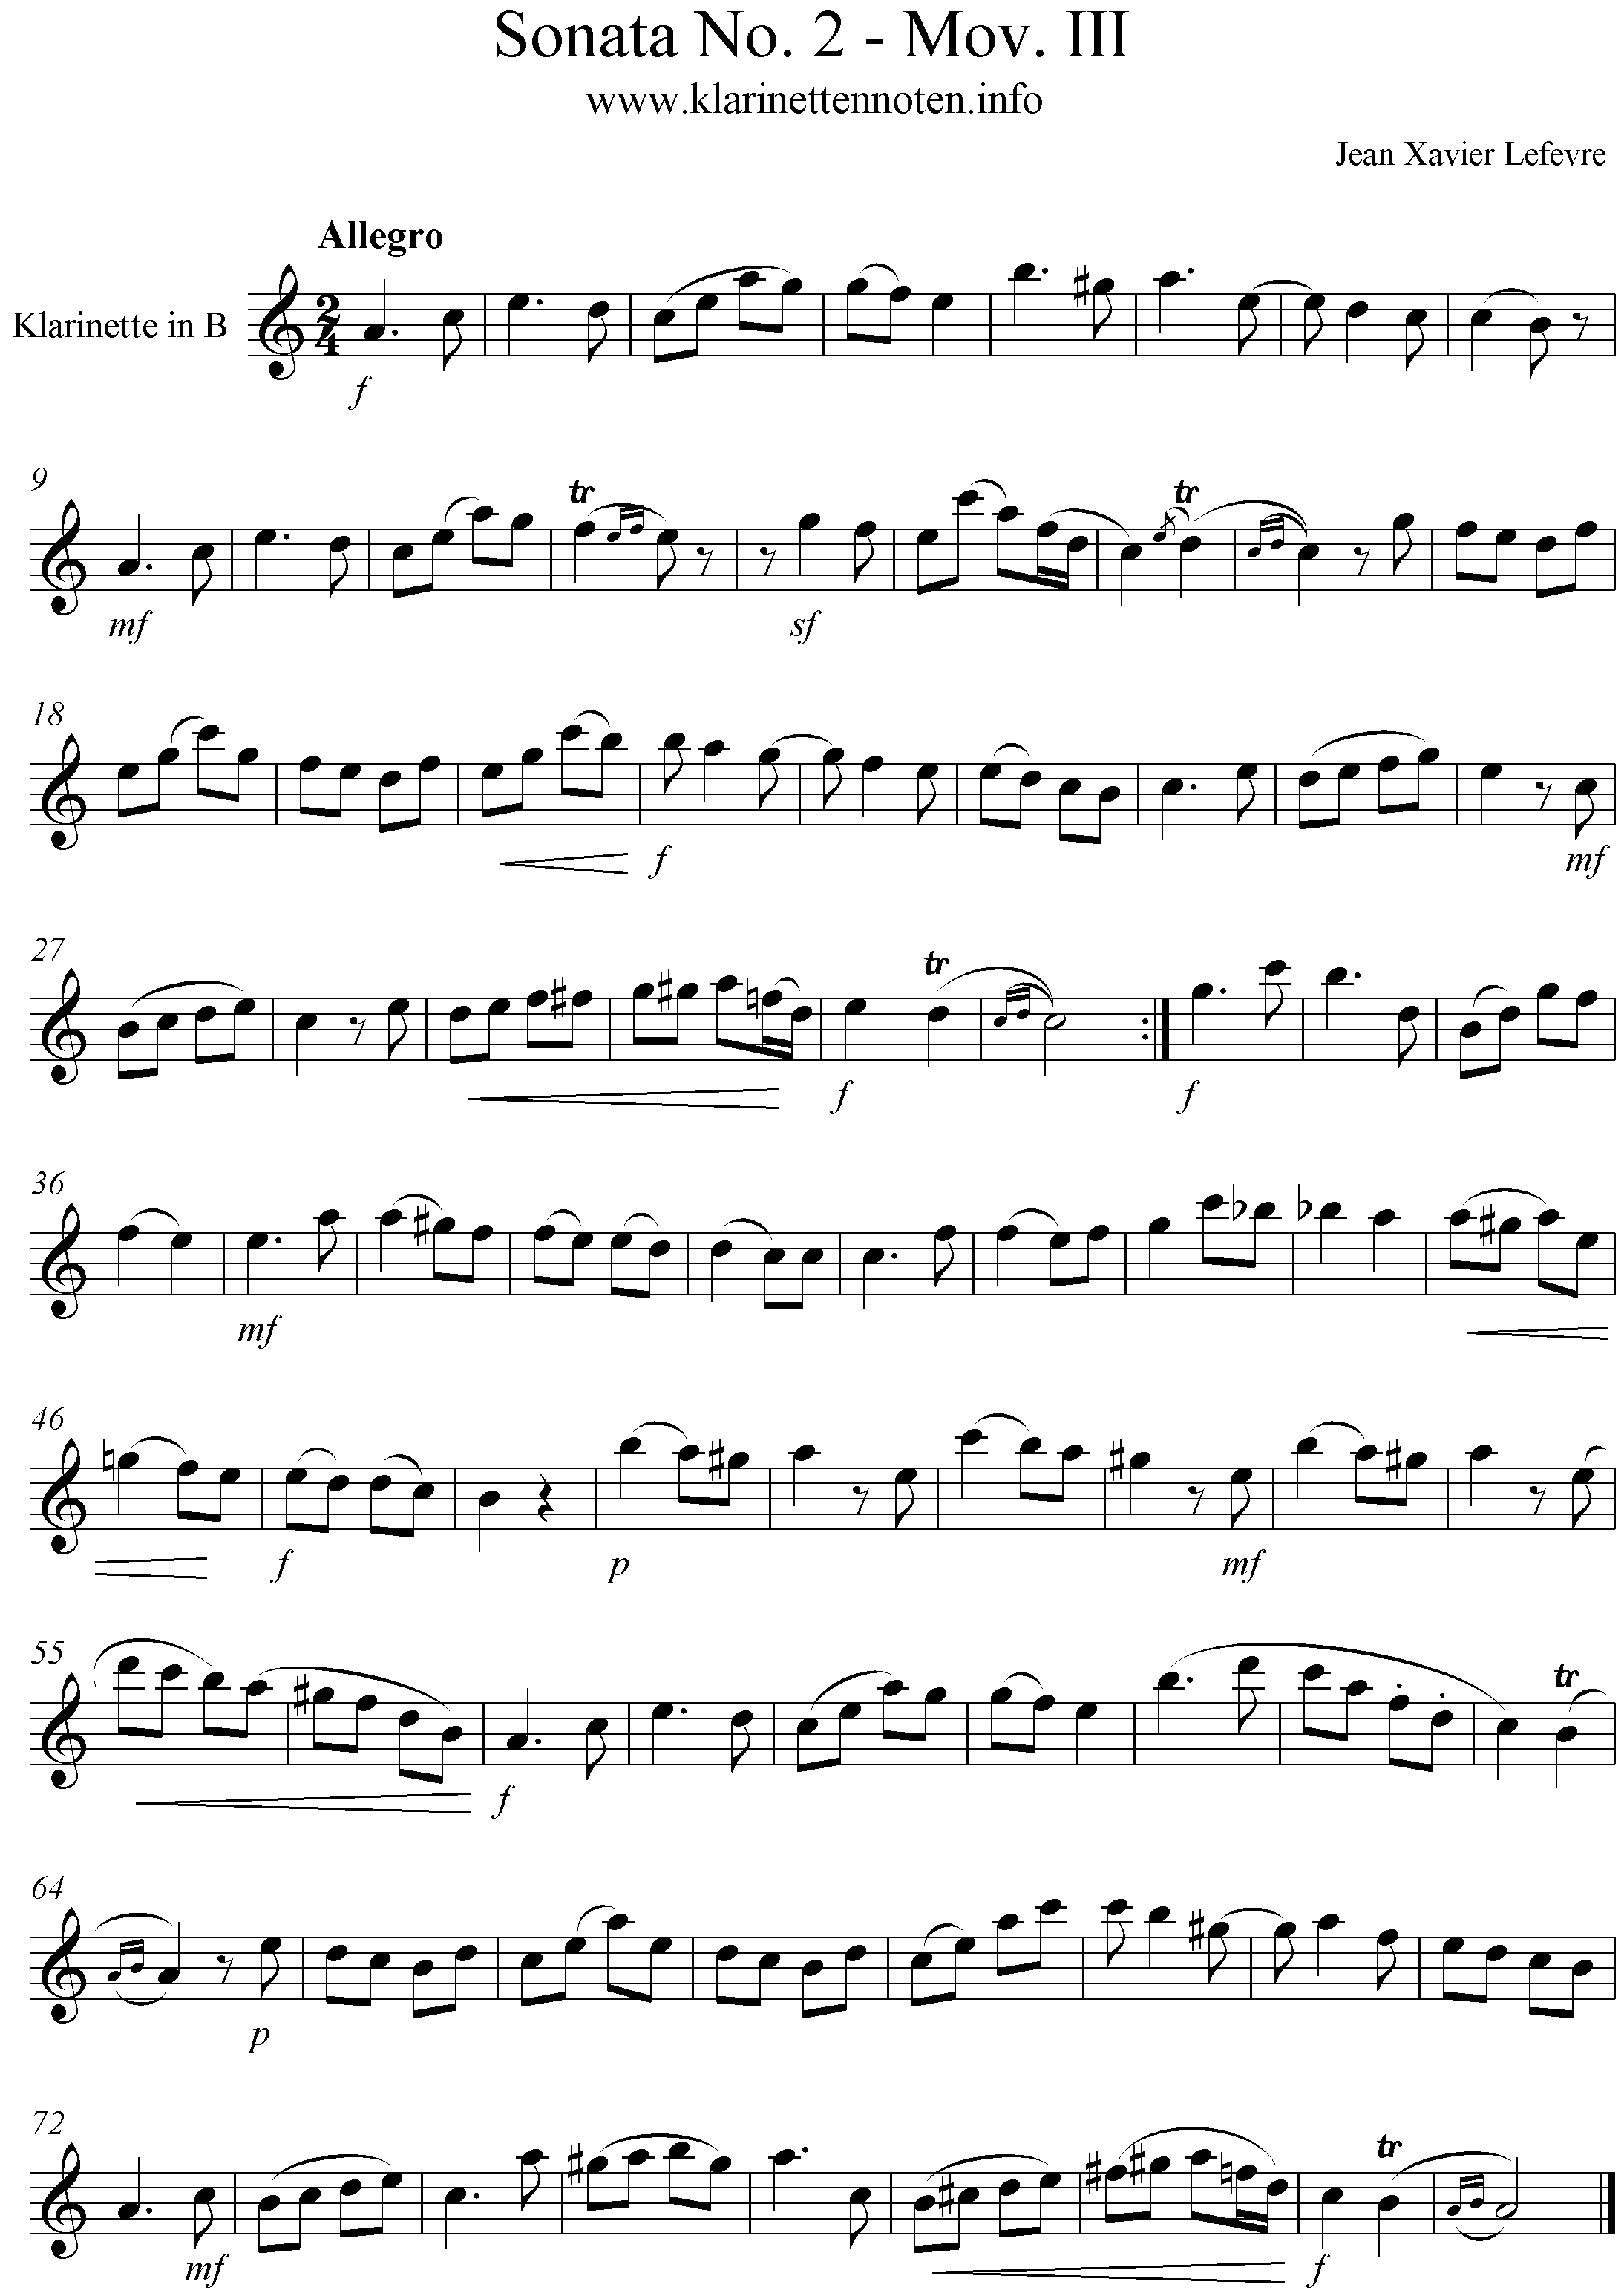 Lefevre Sonata No. 2 for Clarinet Mov. III Allegro